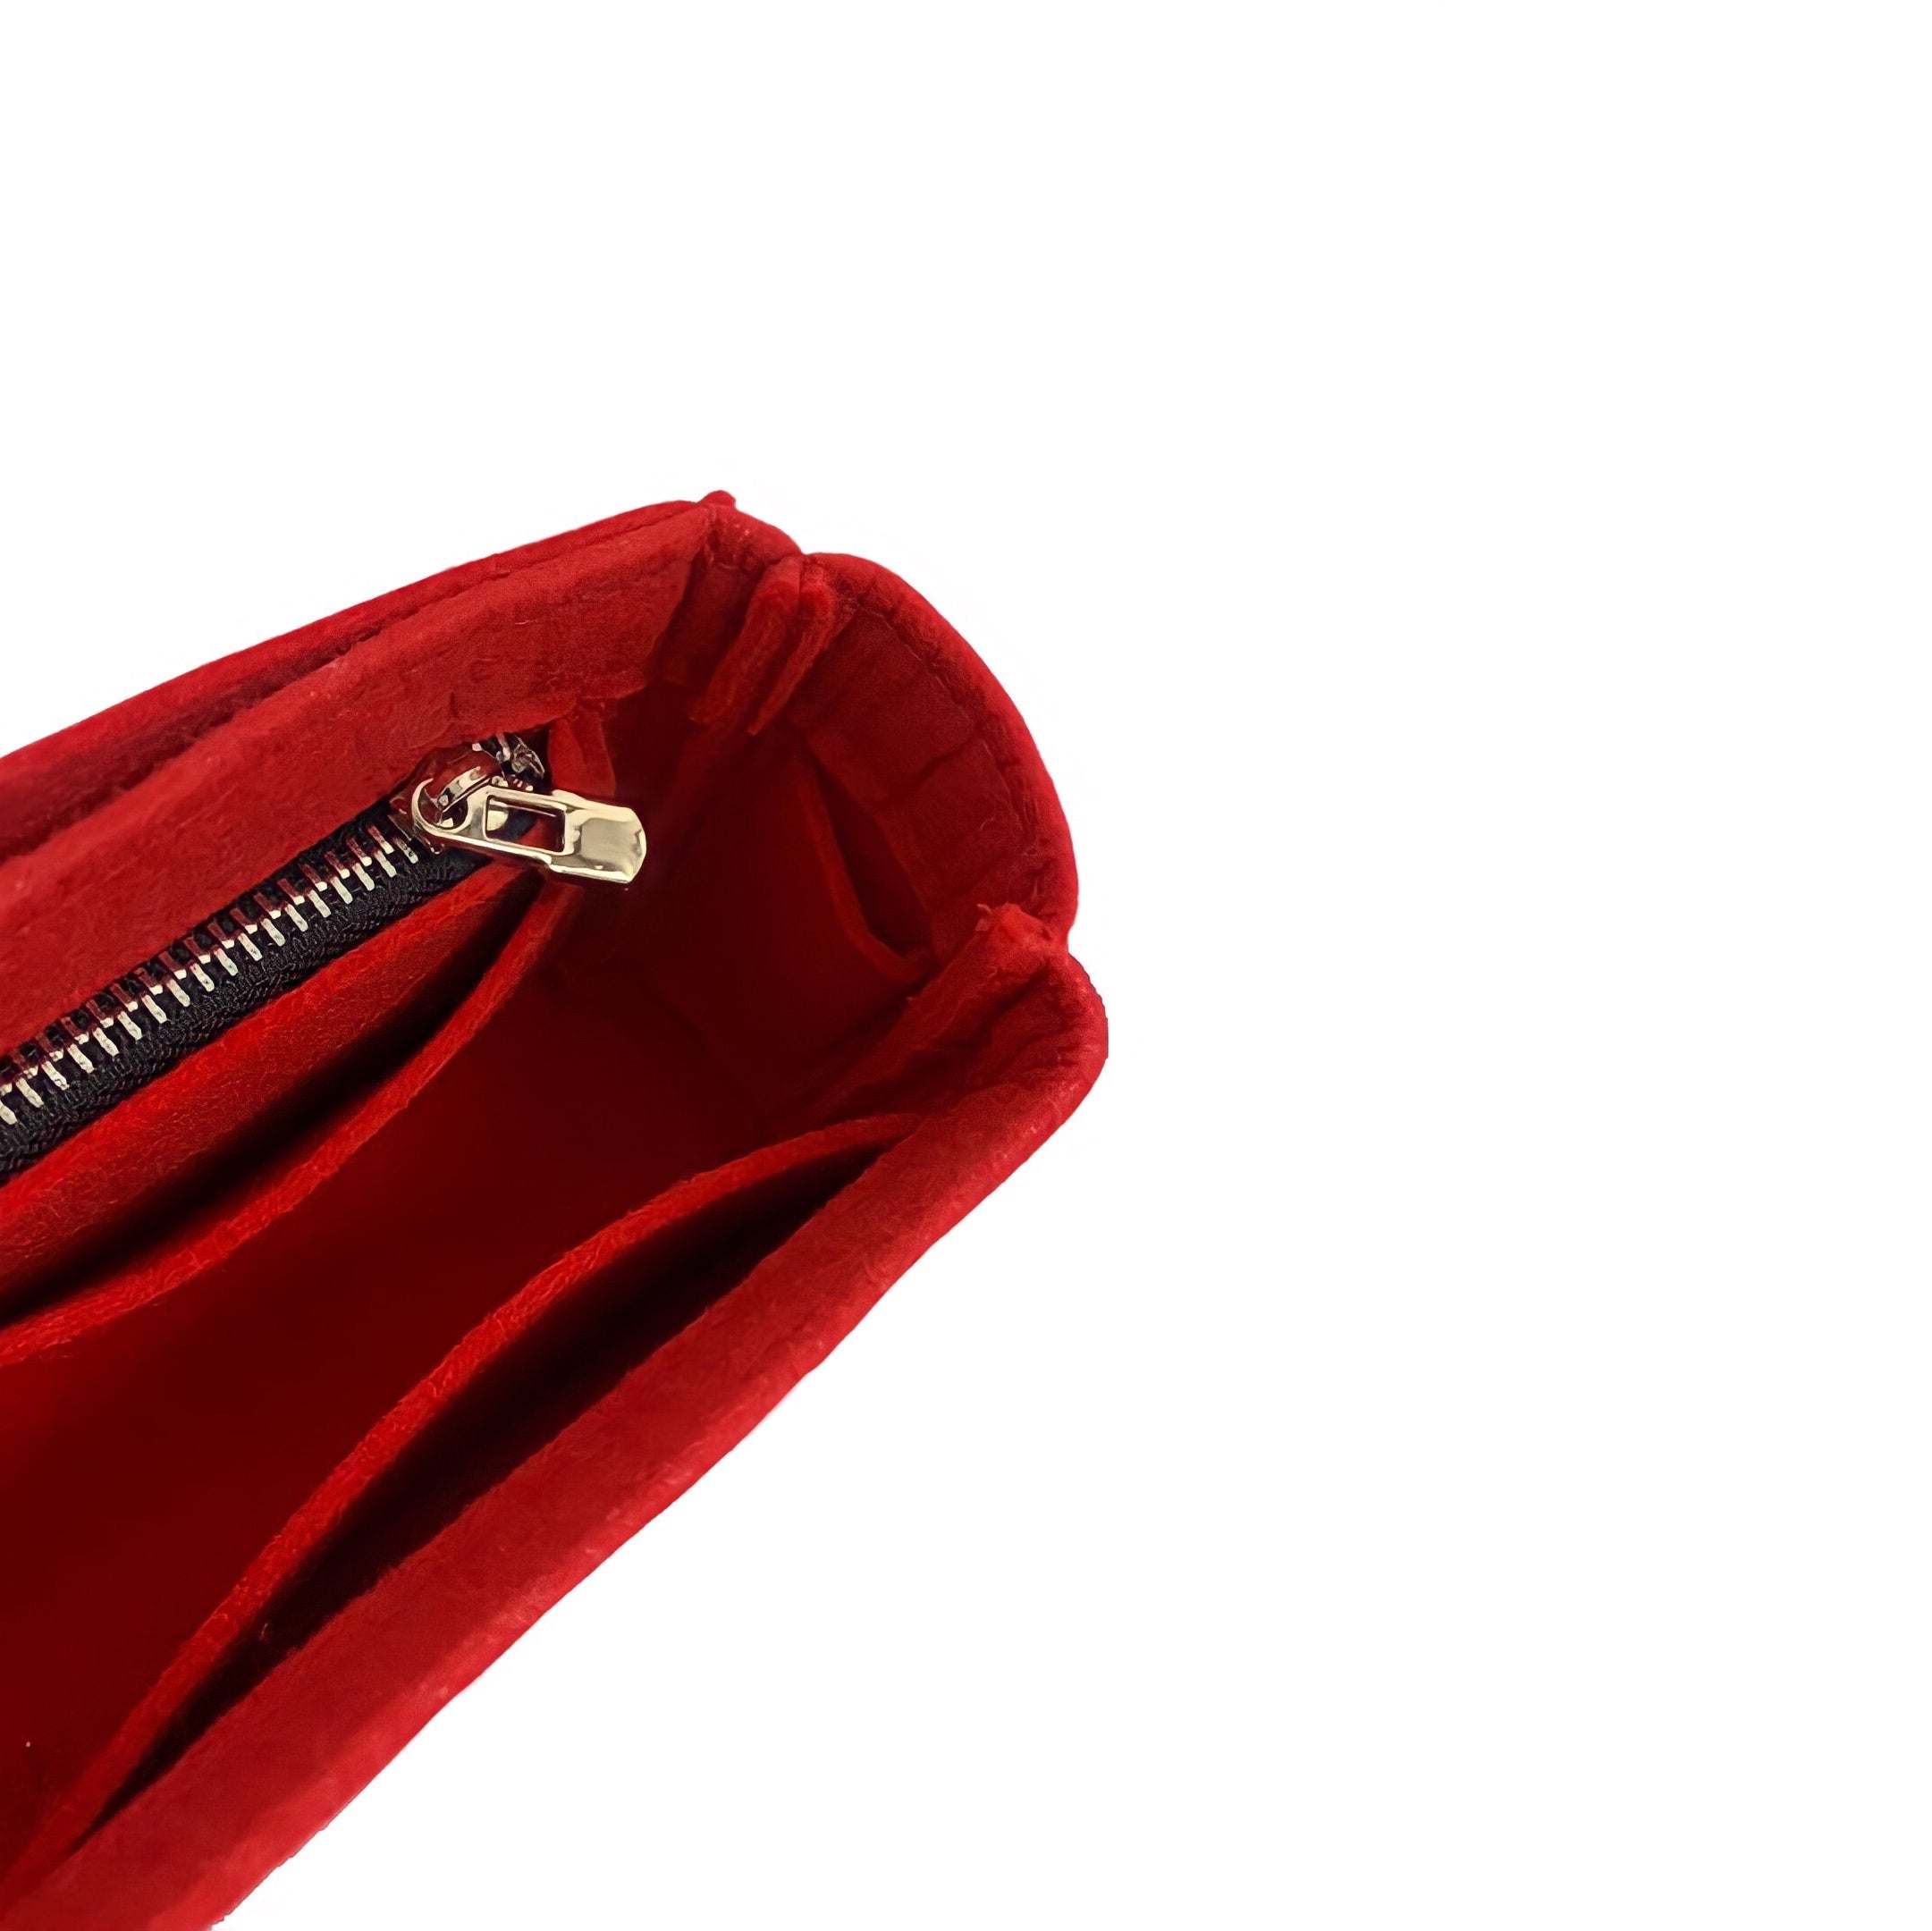 BaginBag | Handbag Organizer For Gucci GG Marmont Small size bag | Designer Purse Insert | Bag Insert Organizer | Gucci Organizer | Bag Organizer | Tote bag organizer |  Bag protector | Organizer inserts for handbags | purse insert organizer